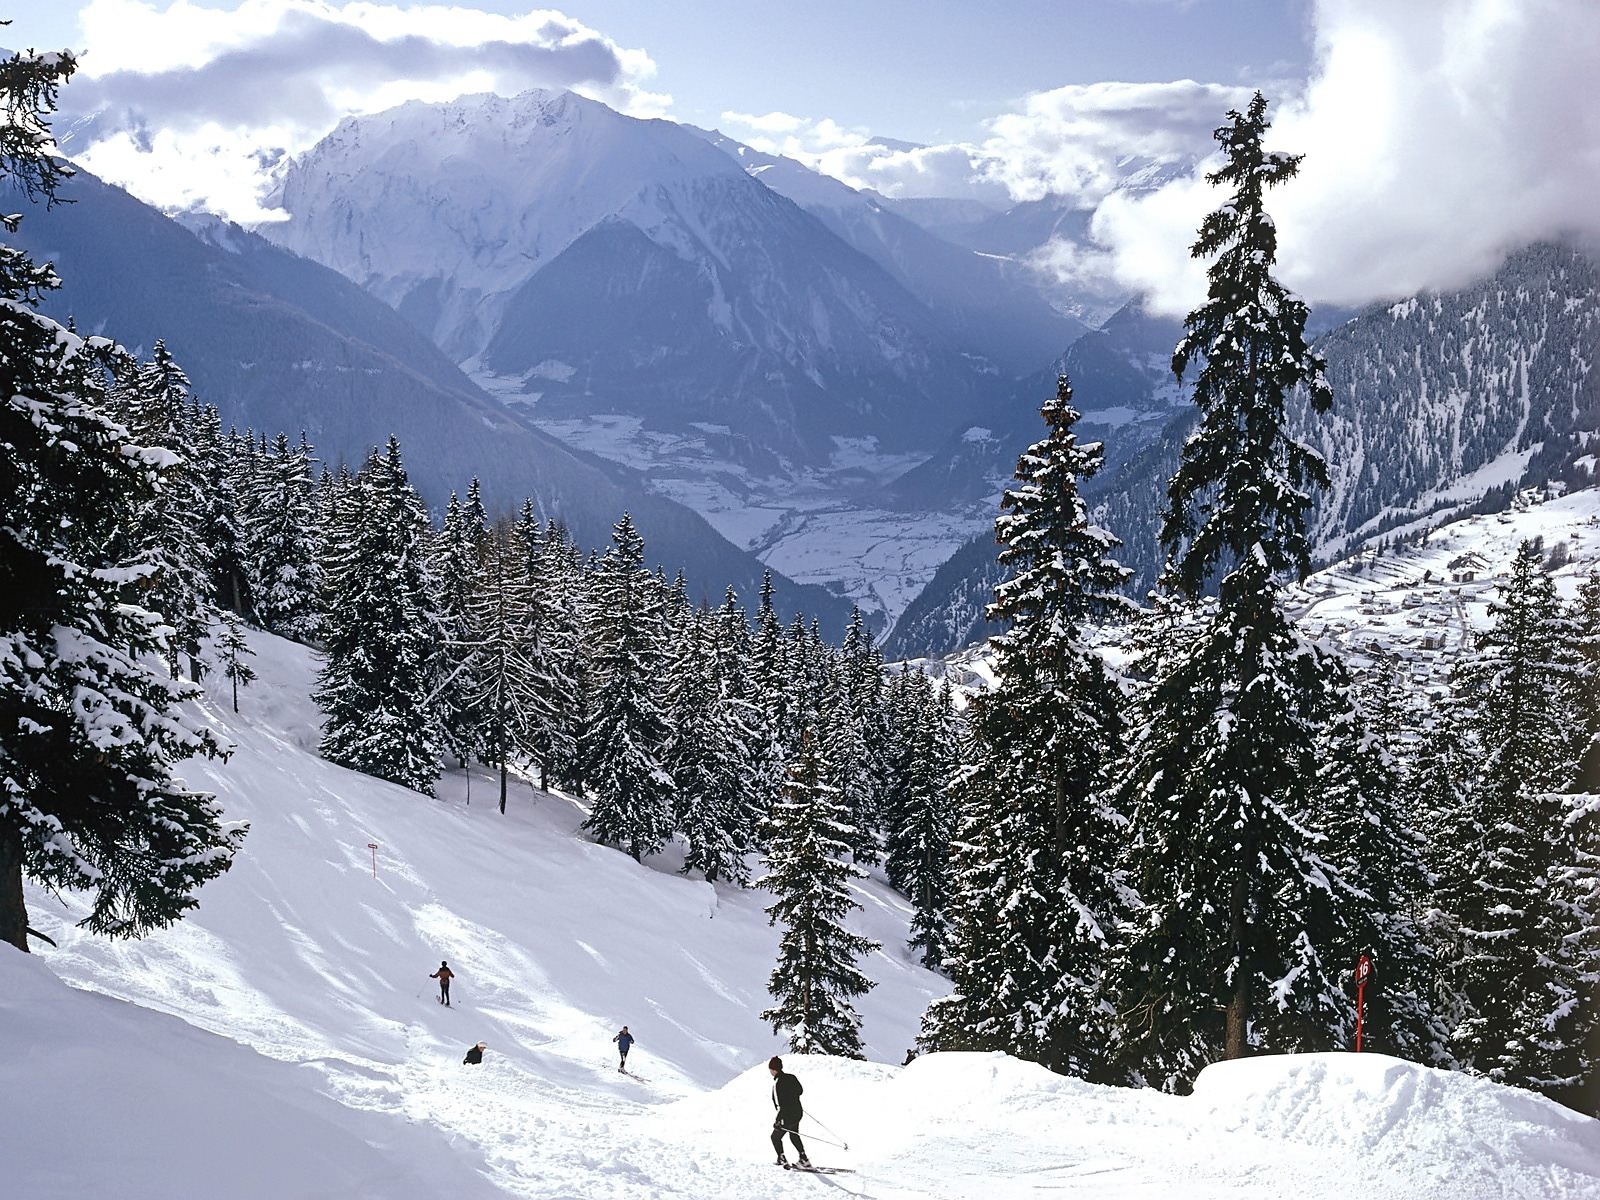 skiing wallpaper - Google Search | Paisajes Sublimes, Snow ...